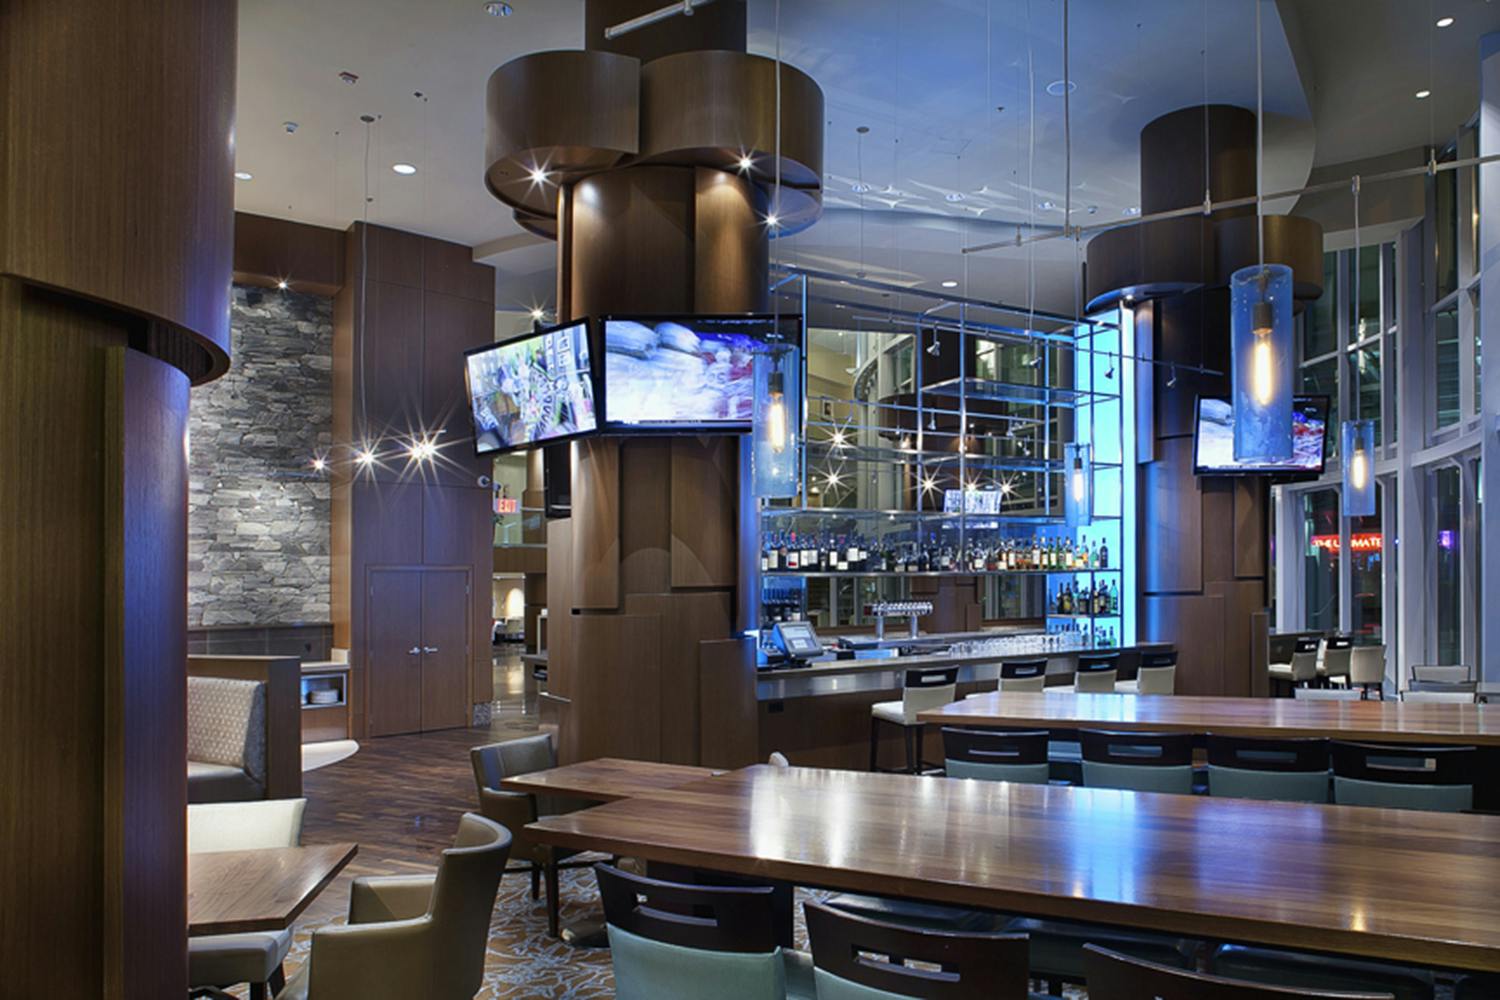 Marriott Pinnacle dining room and bar